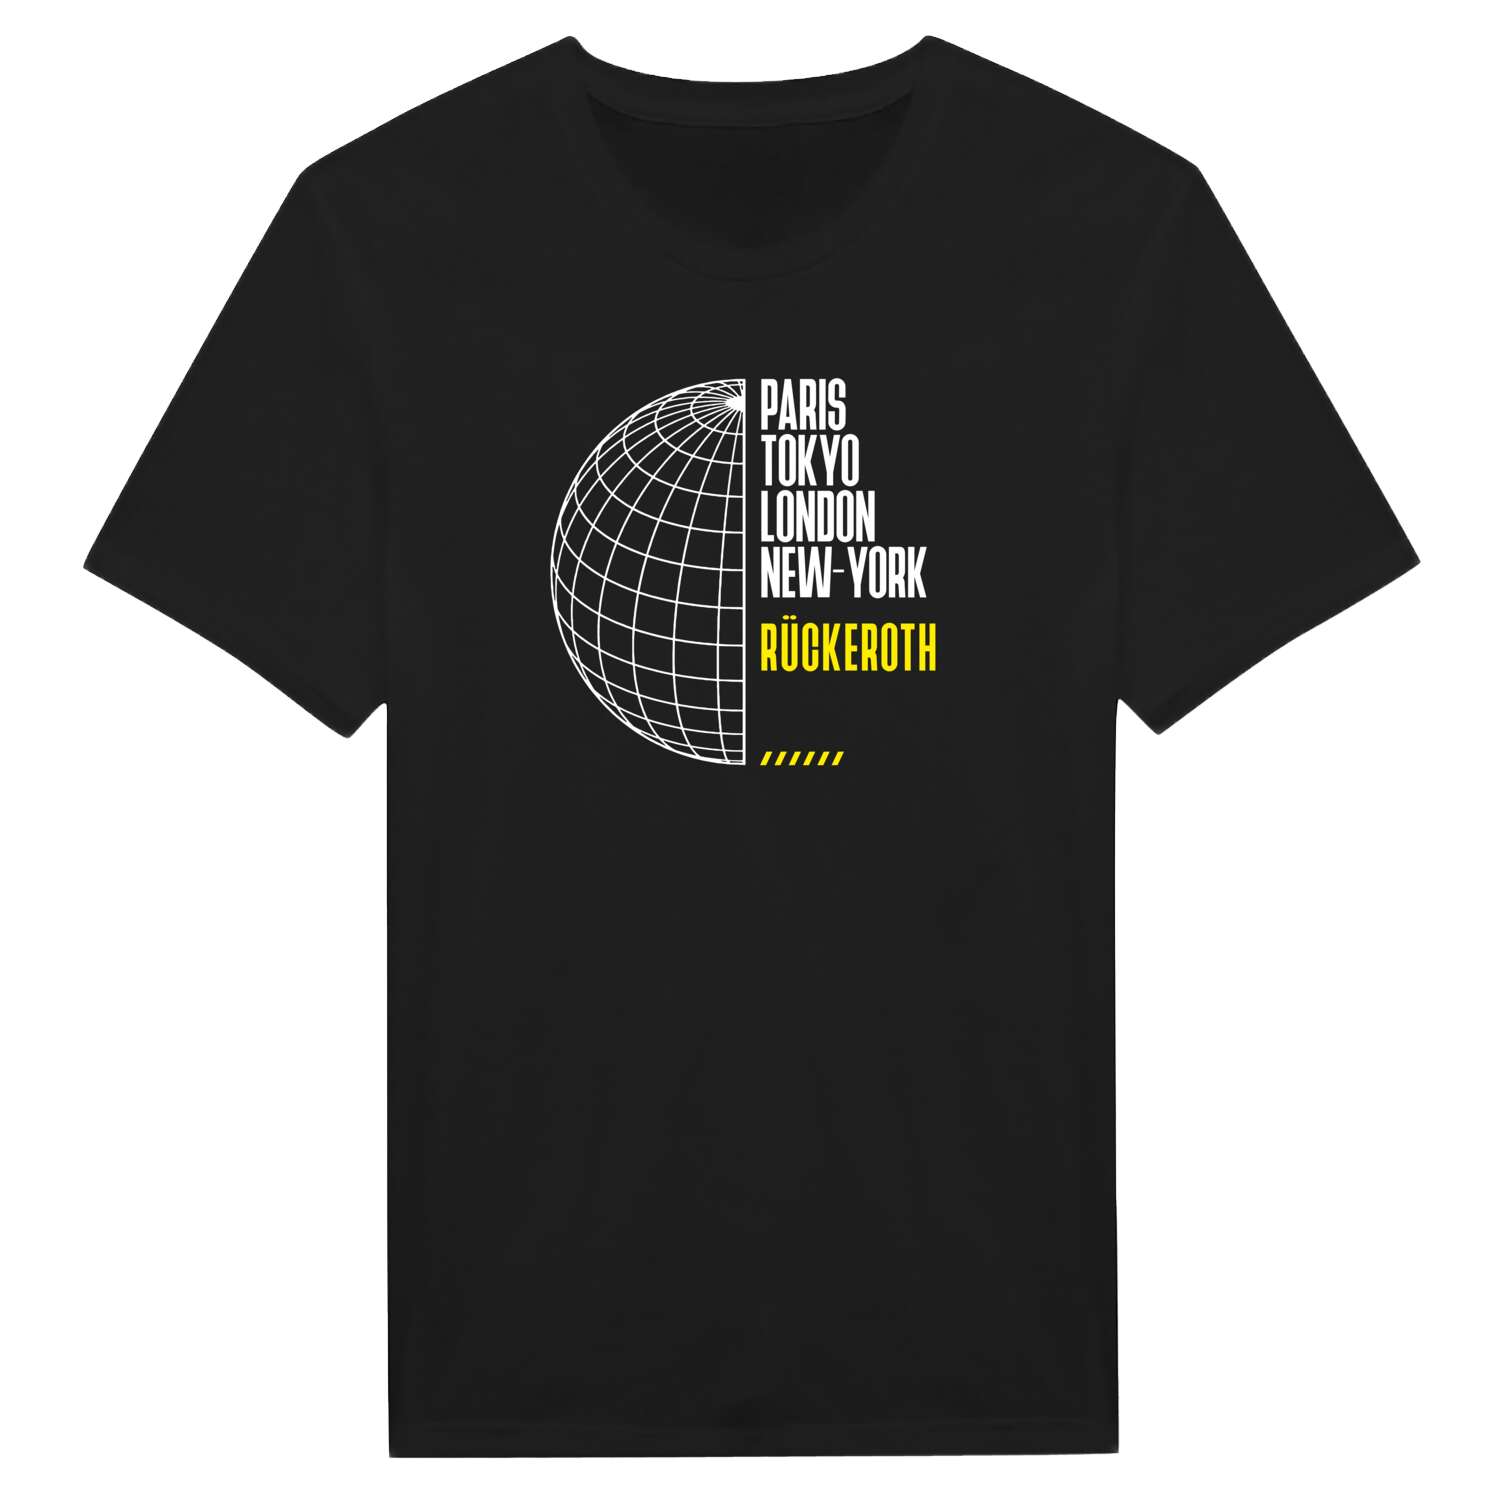 Rückeroth T-Shirt »Paris Tokyo London«